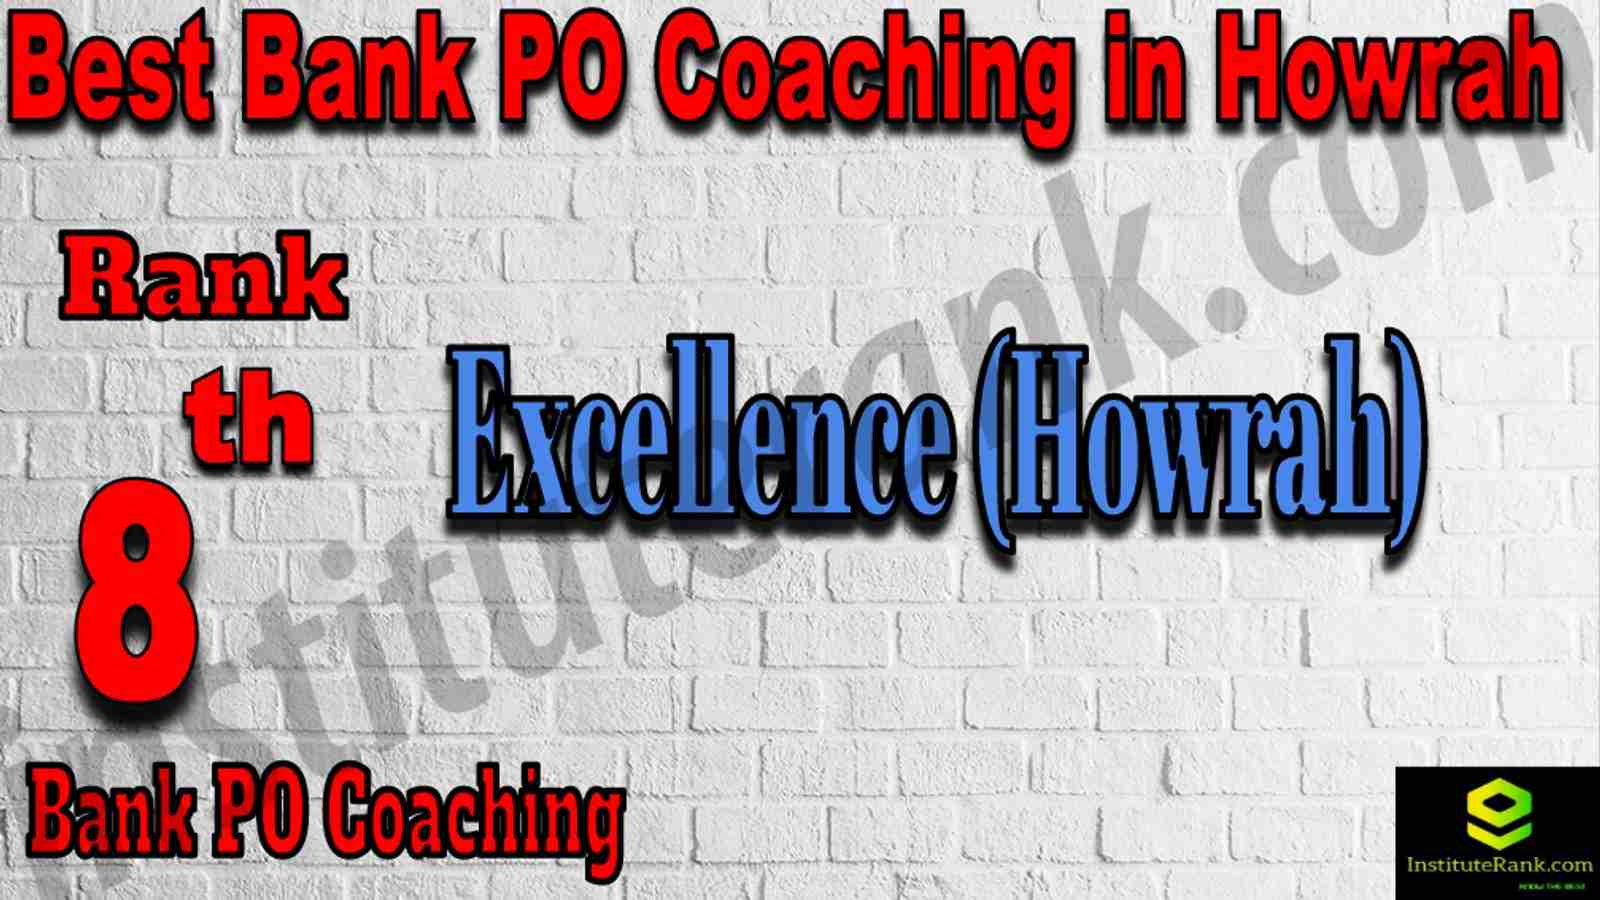 8th Best Bank PO Coaching in Howrah